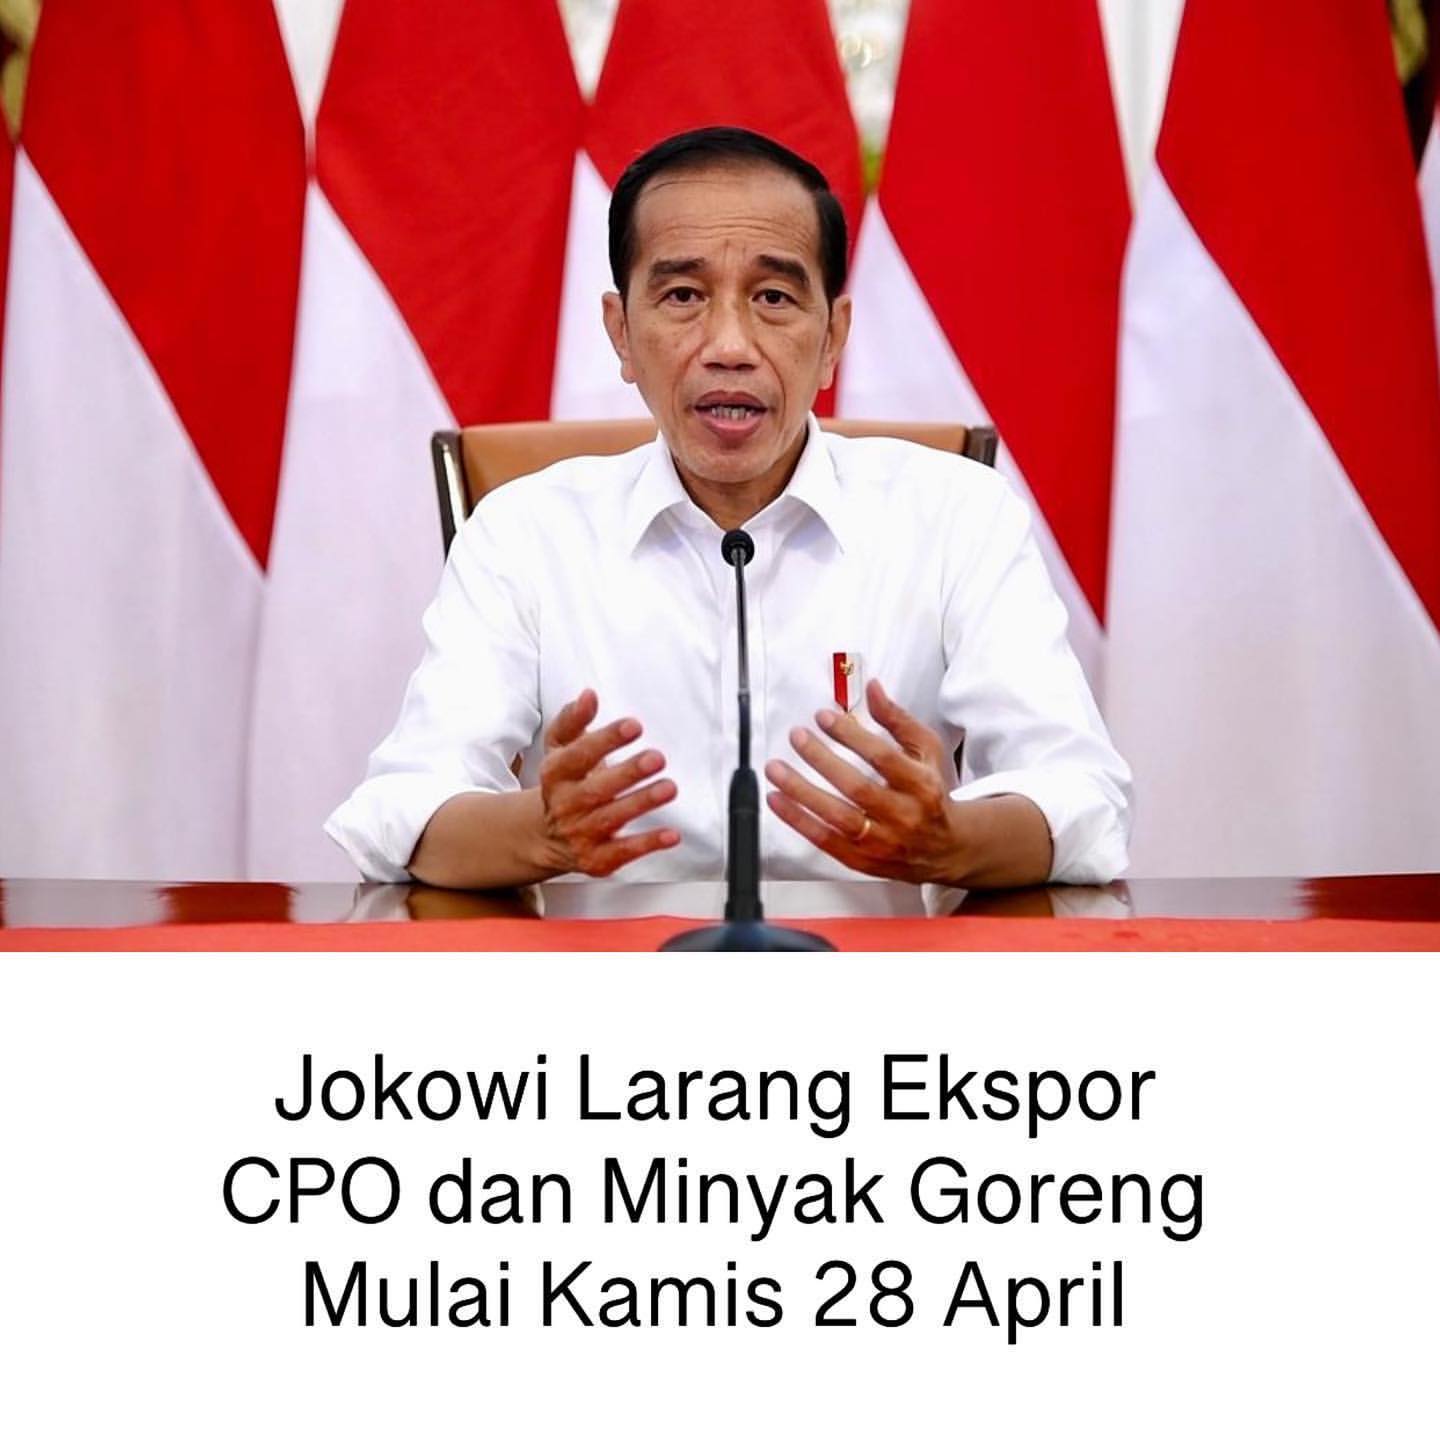 Jokowi Larang Ekspor CPO dan Minyak Goreng Mulai Kamis 28 April